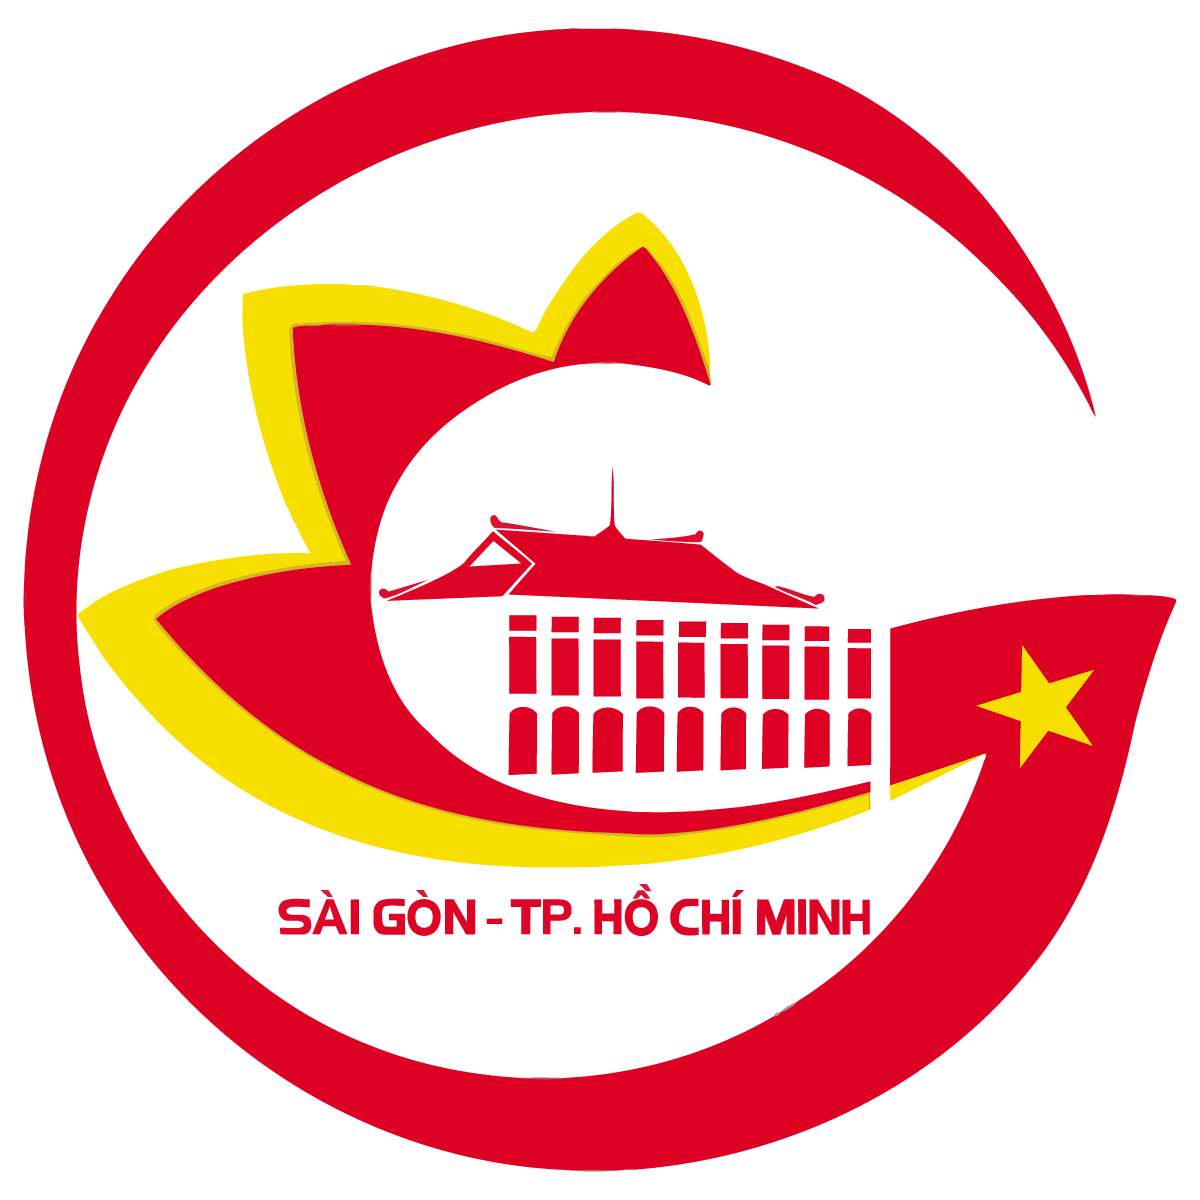 Thanh pho Ho Chi Minh 1